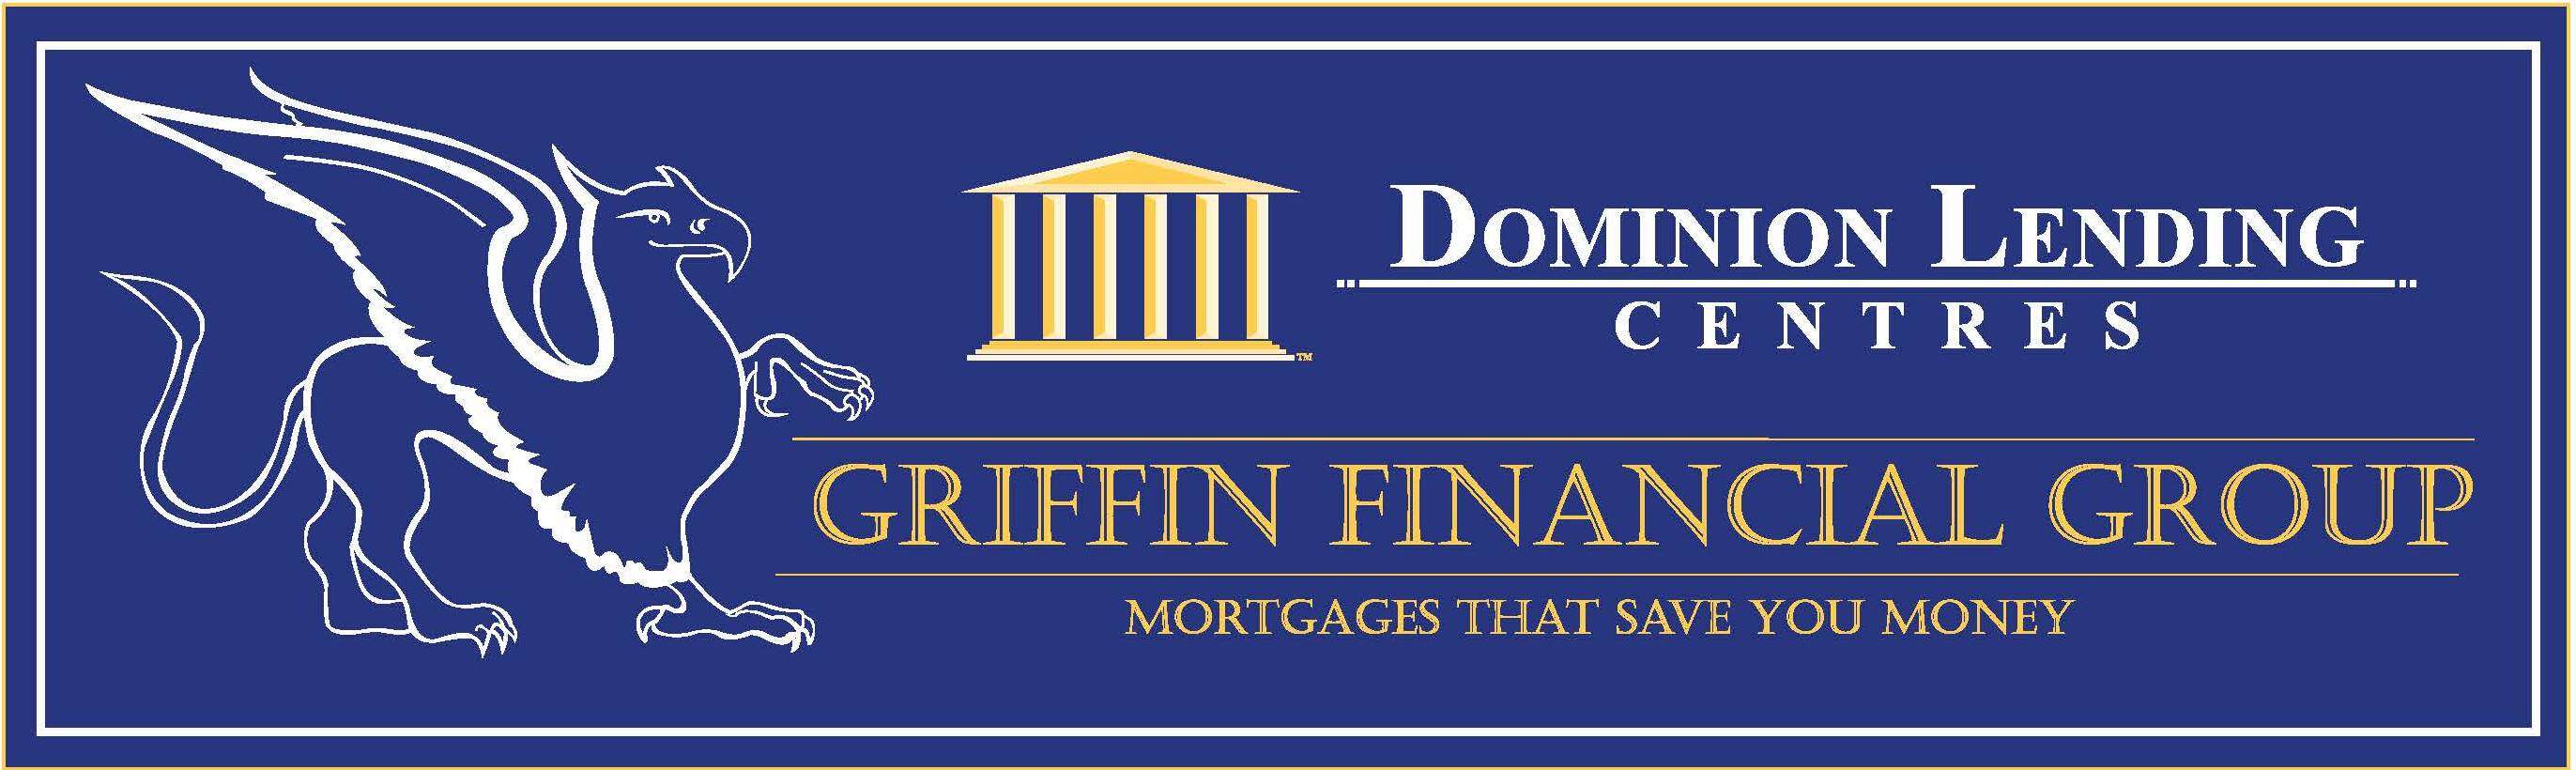 Dominion Lending Centres Griffin Financial Group